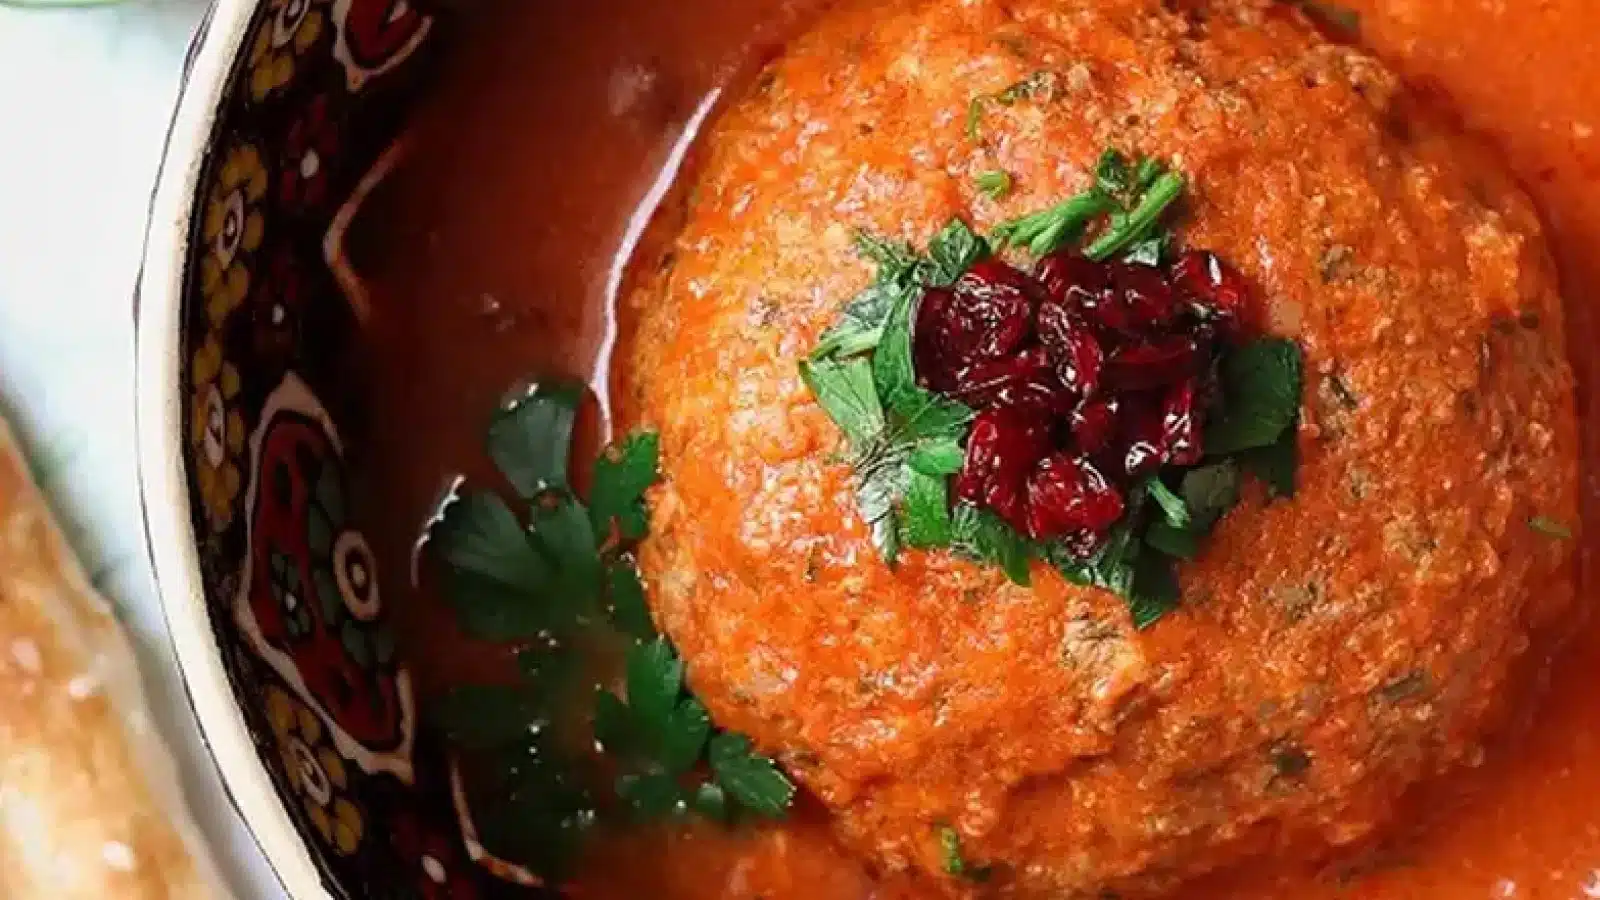 How to make Koofte Tabrizi, a traditional Persian meatball